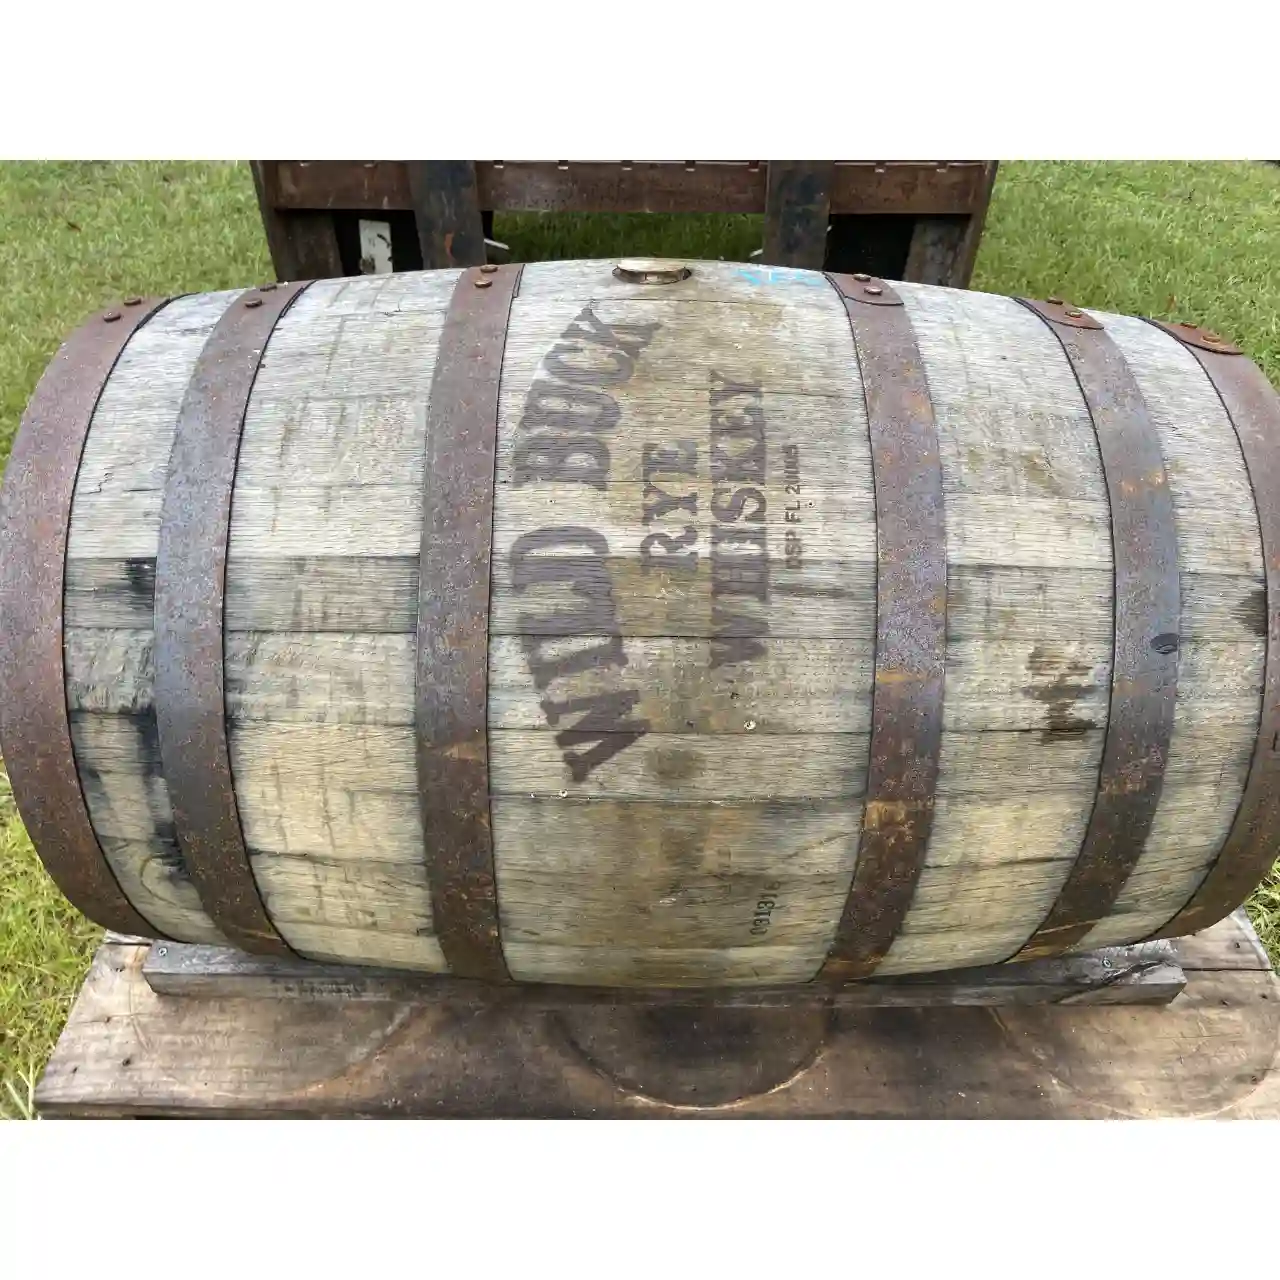 NJoy Spirits Distillery Whiskey Barrels For Sale Sep 2021 - 5-Gallon Wet Whiskey Barrel